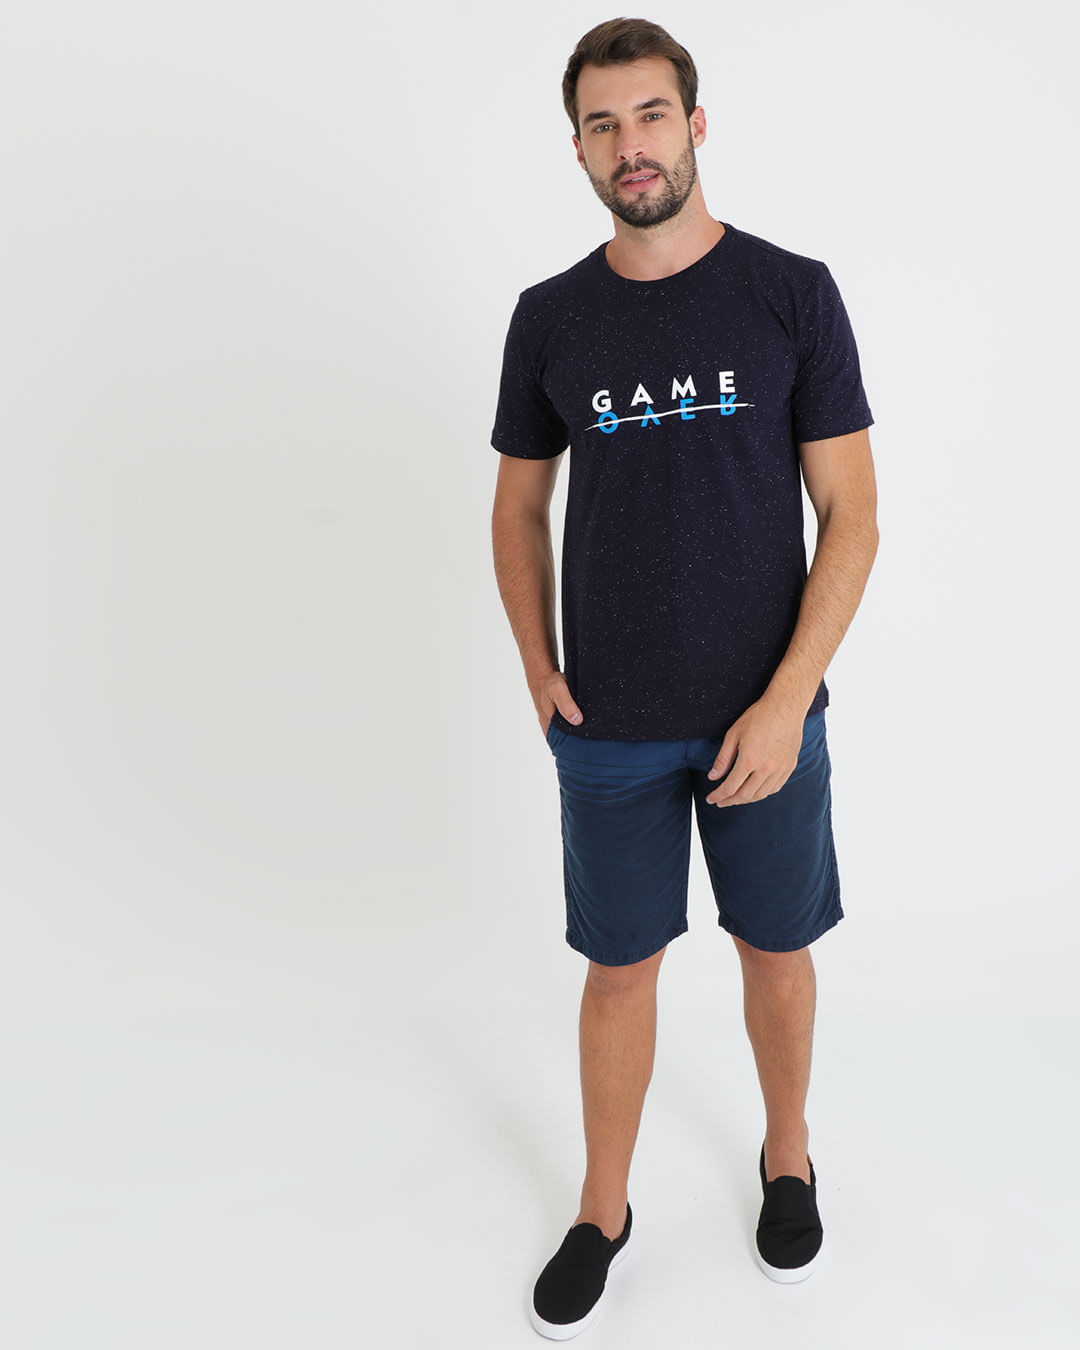 Camiseta-Masculina-Estampada-Game-Azul-Marinho